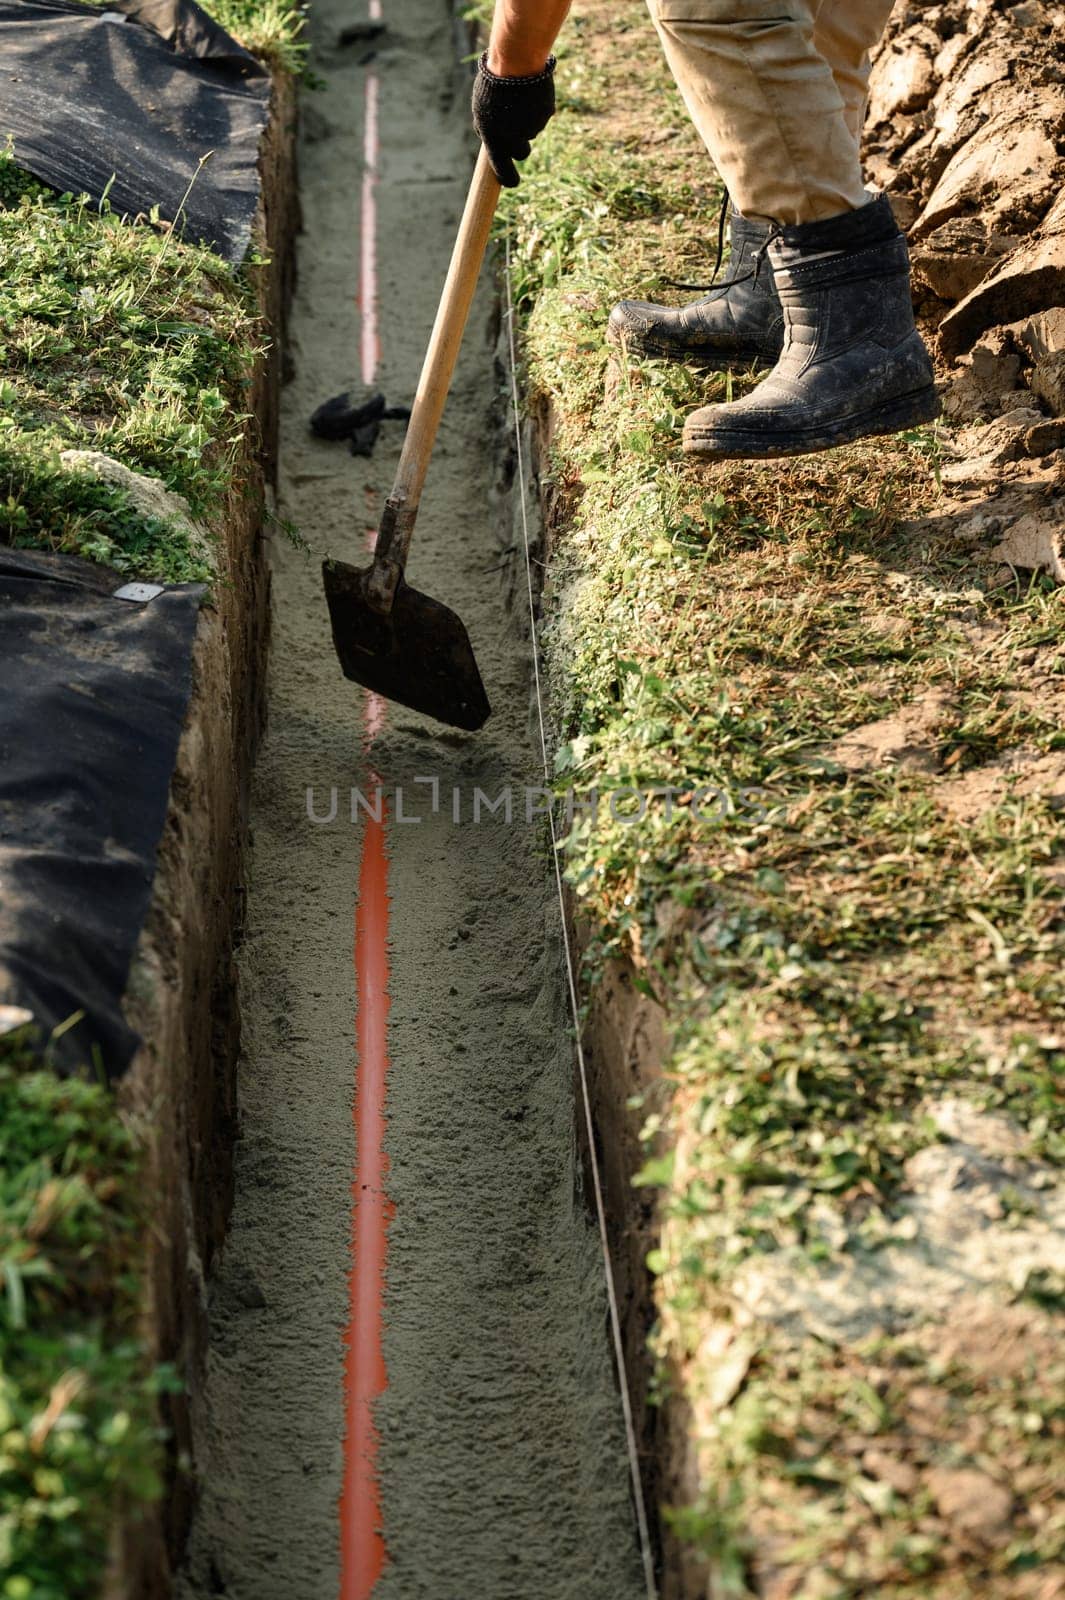 Plumber installs a reinforced orange sewer pipe during site maintenance. by Niko_Cingaryuk